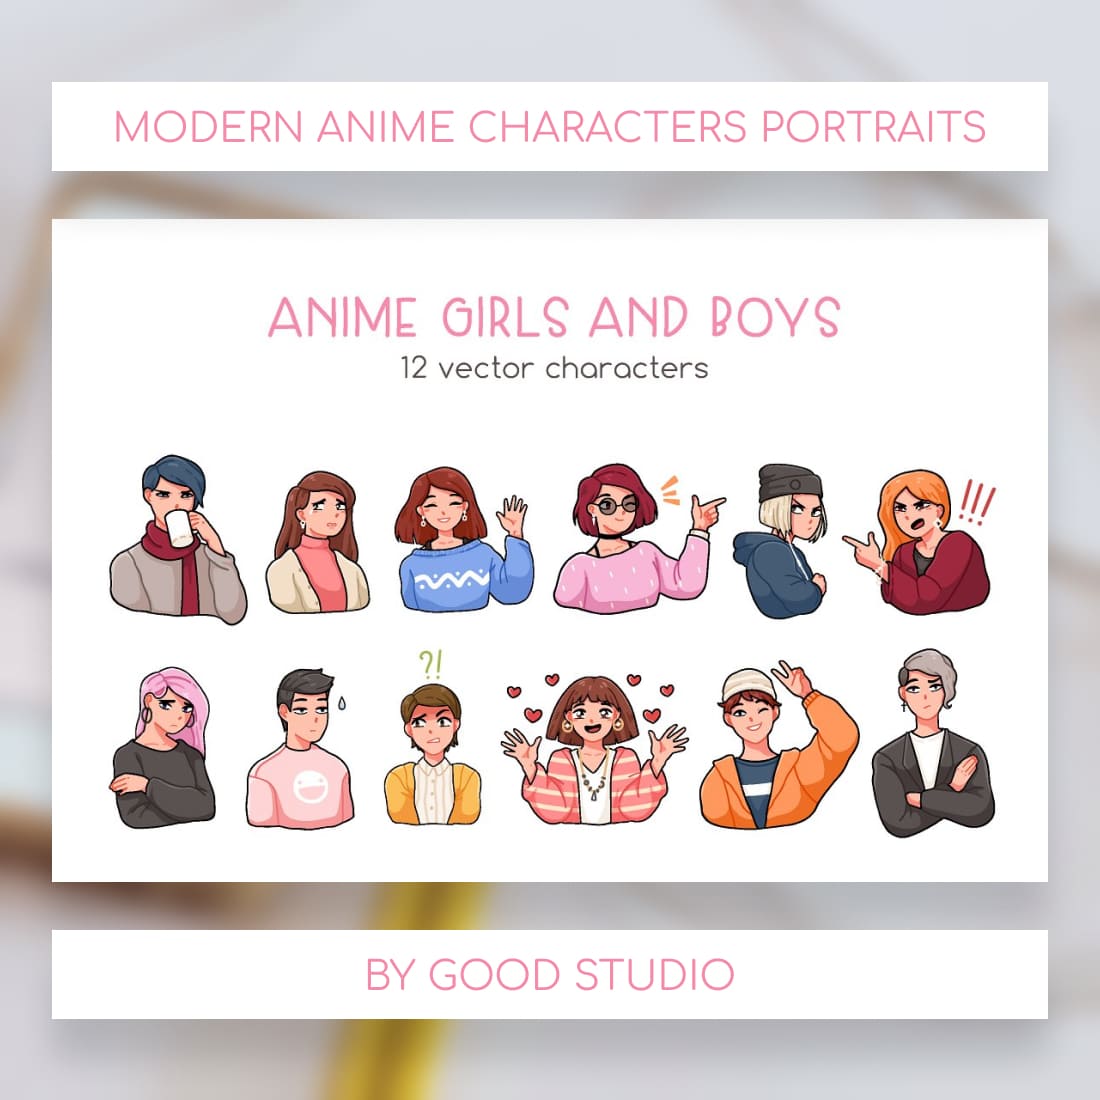 Modern anime characters portraits.